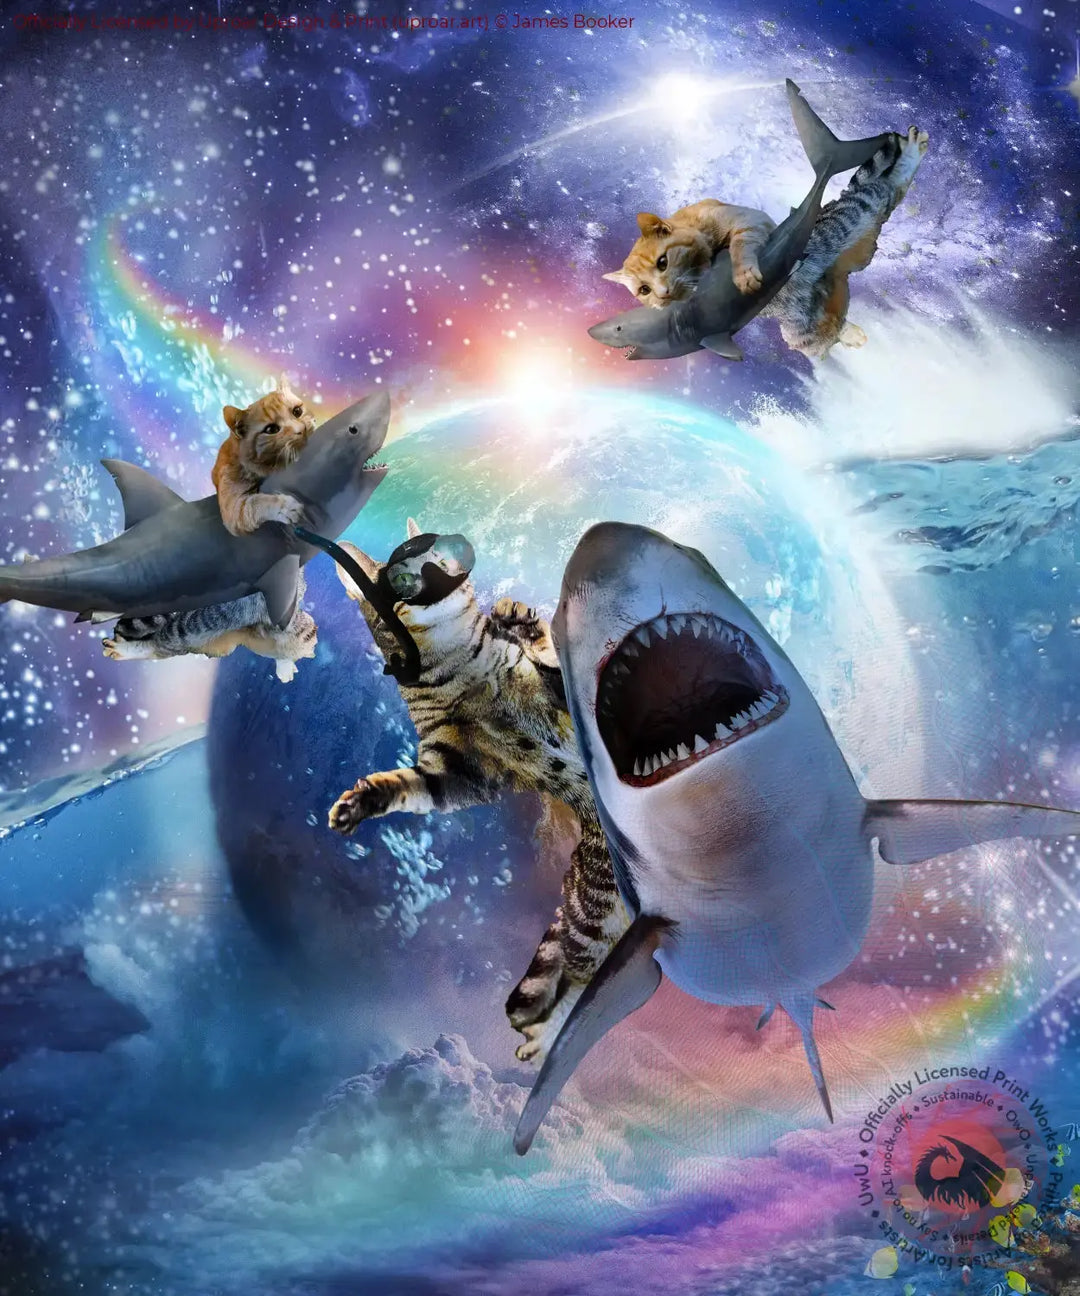 Cat Shark In Space James Booker